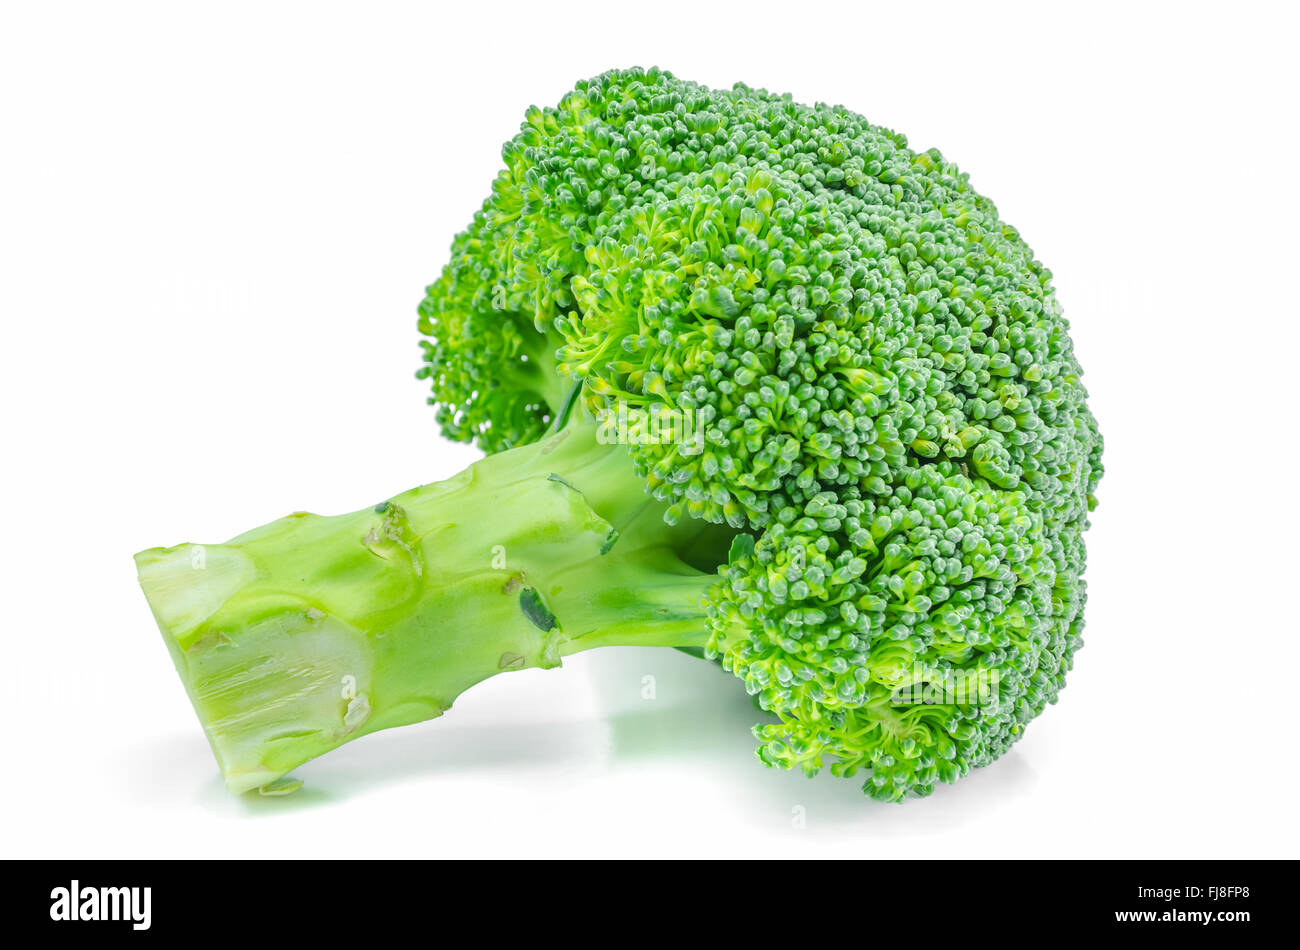 Fresh raw broccoli vegetable on white background. Stock Photo